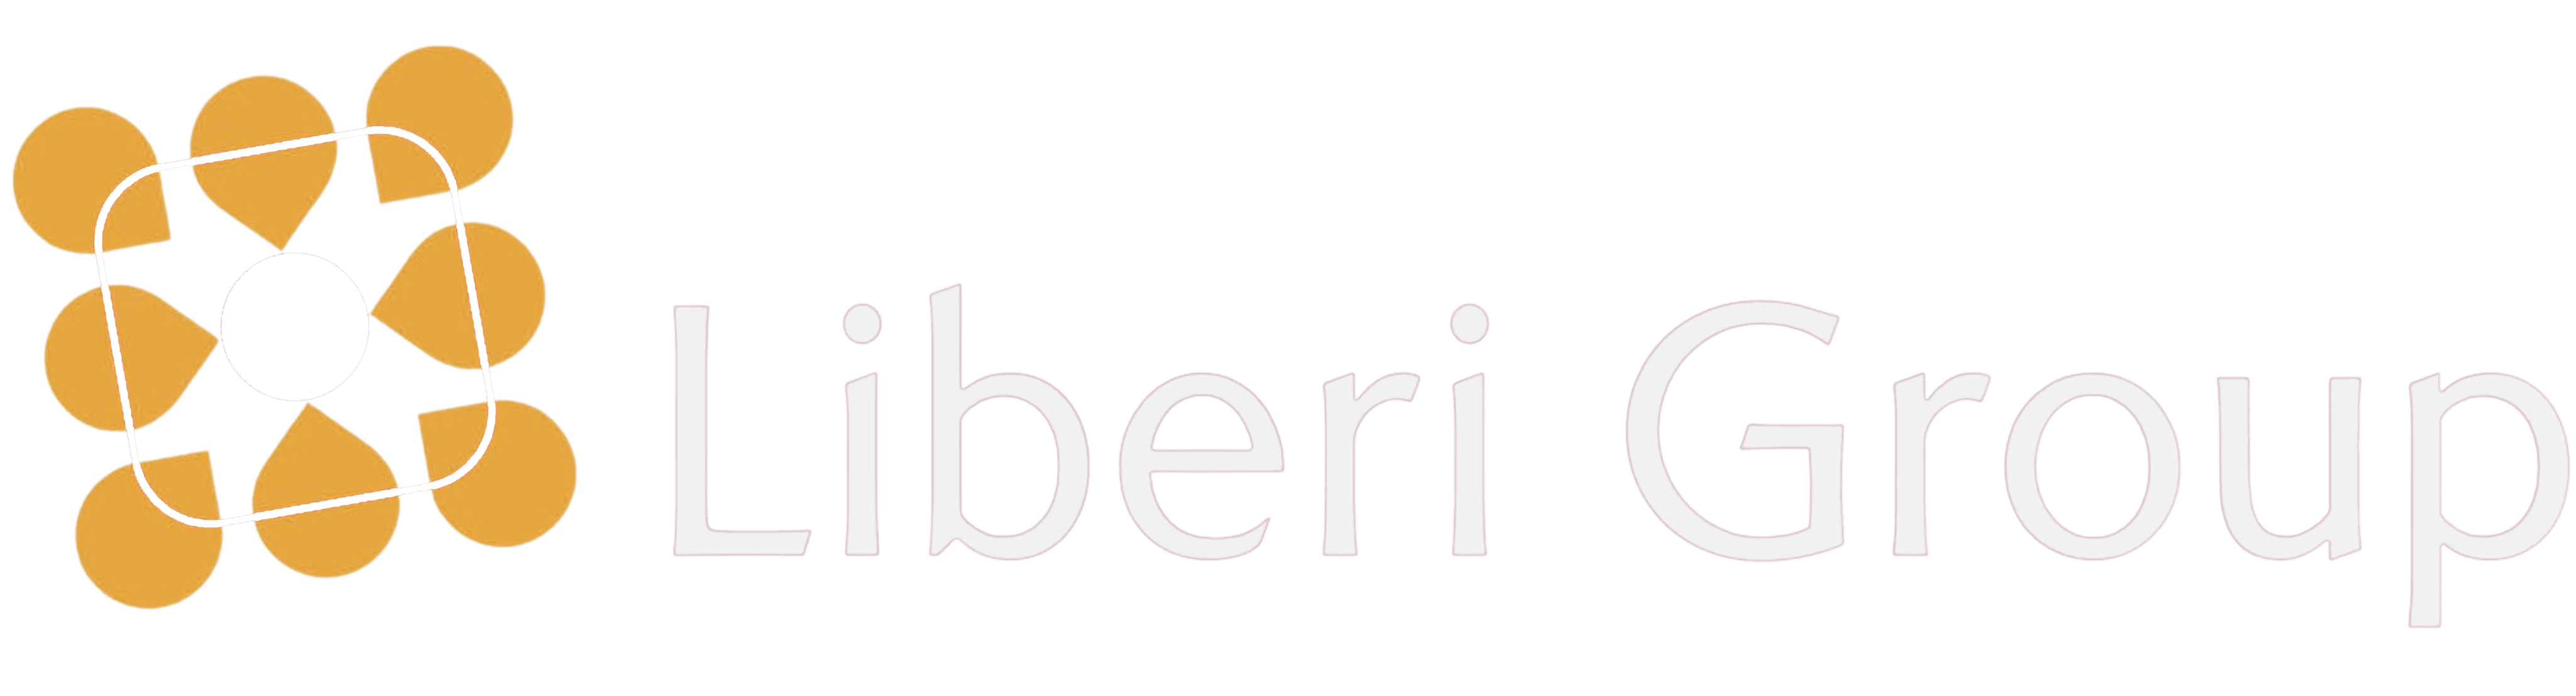 Liberi Group logo